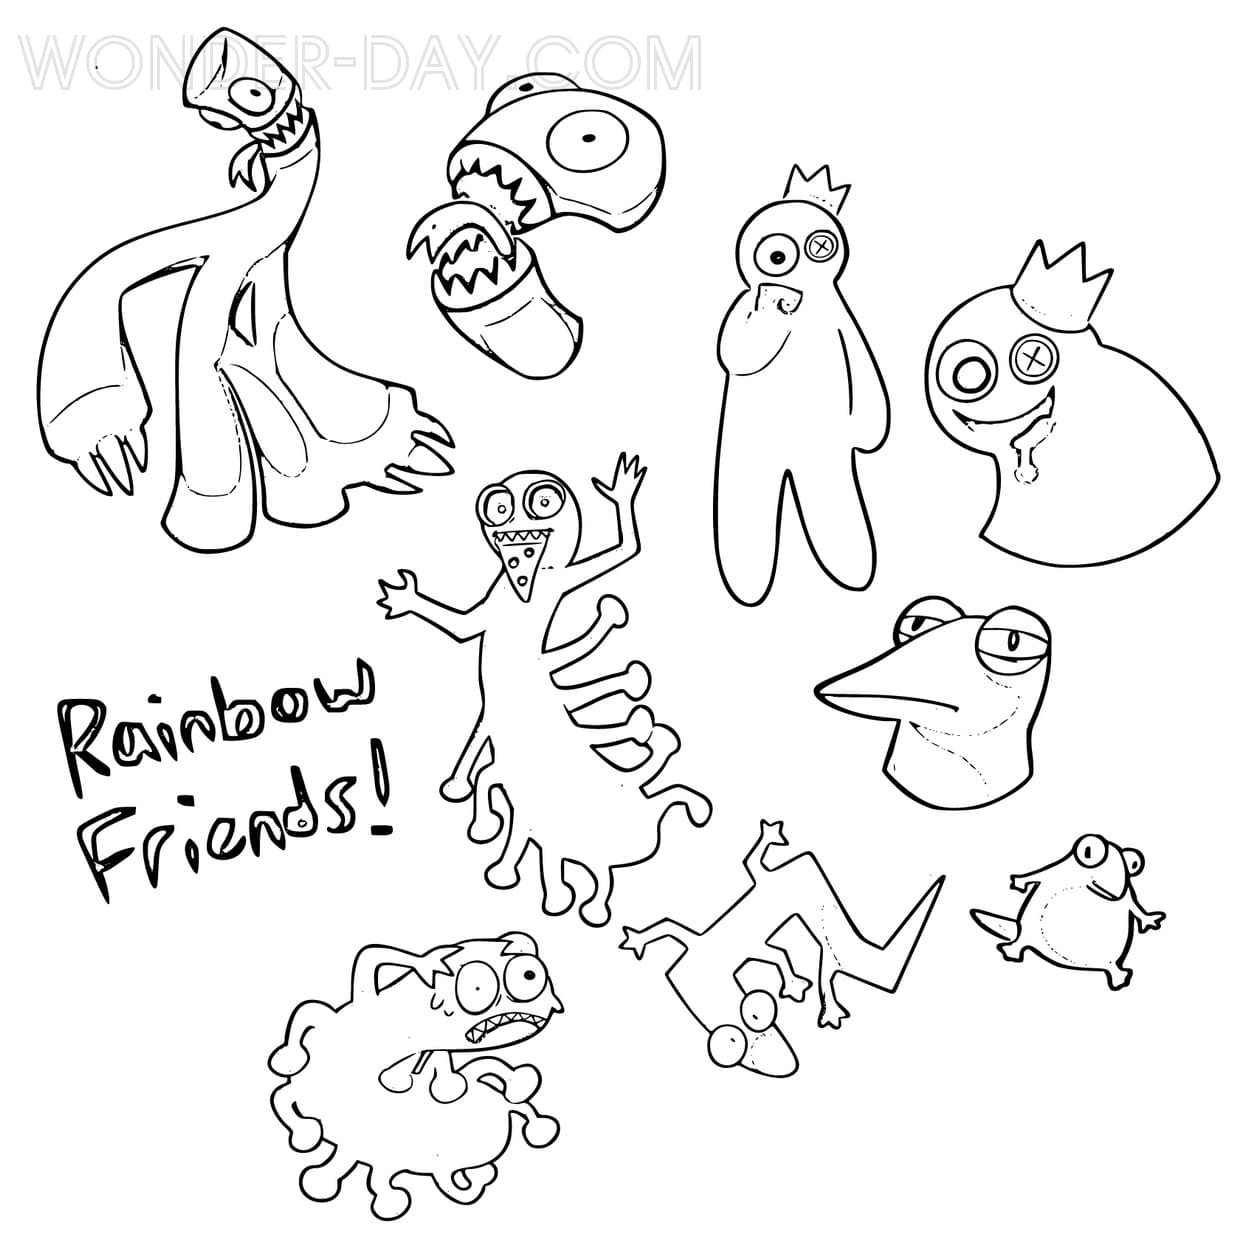 Desenhando ROBLOX - Dibujando ROBLOX - Drawing ROBLOX - RAINBOW FRIENDS  Blue Green Orange Purple Red 